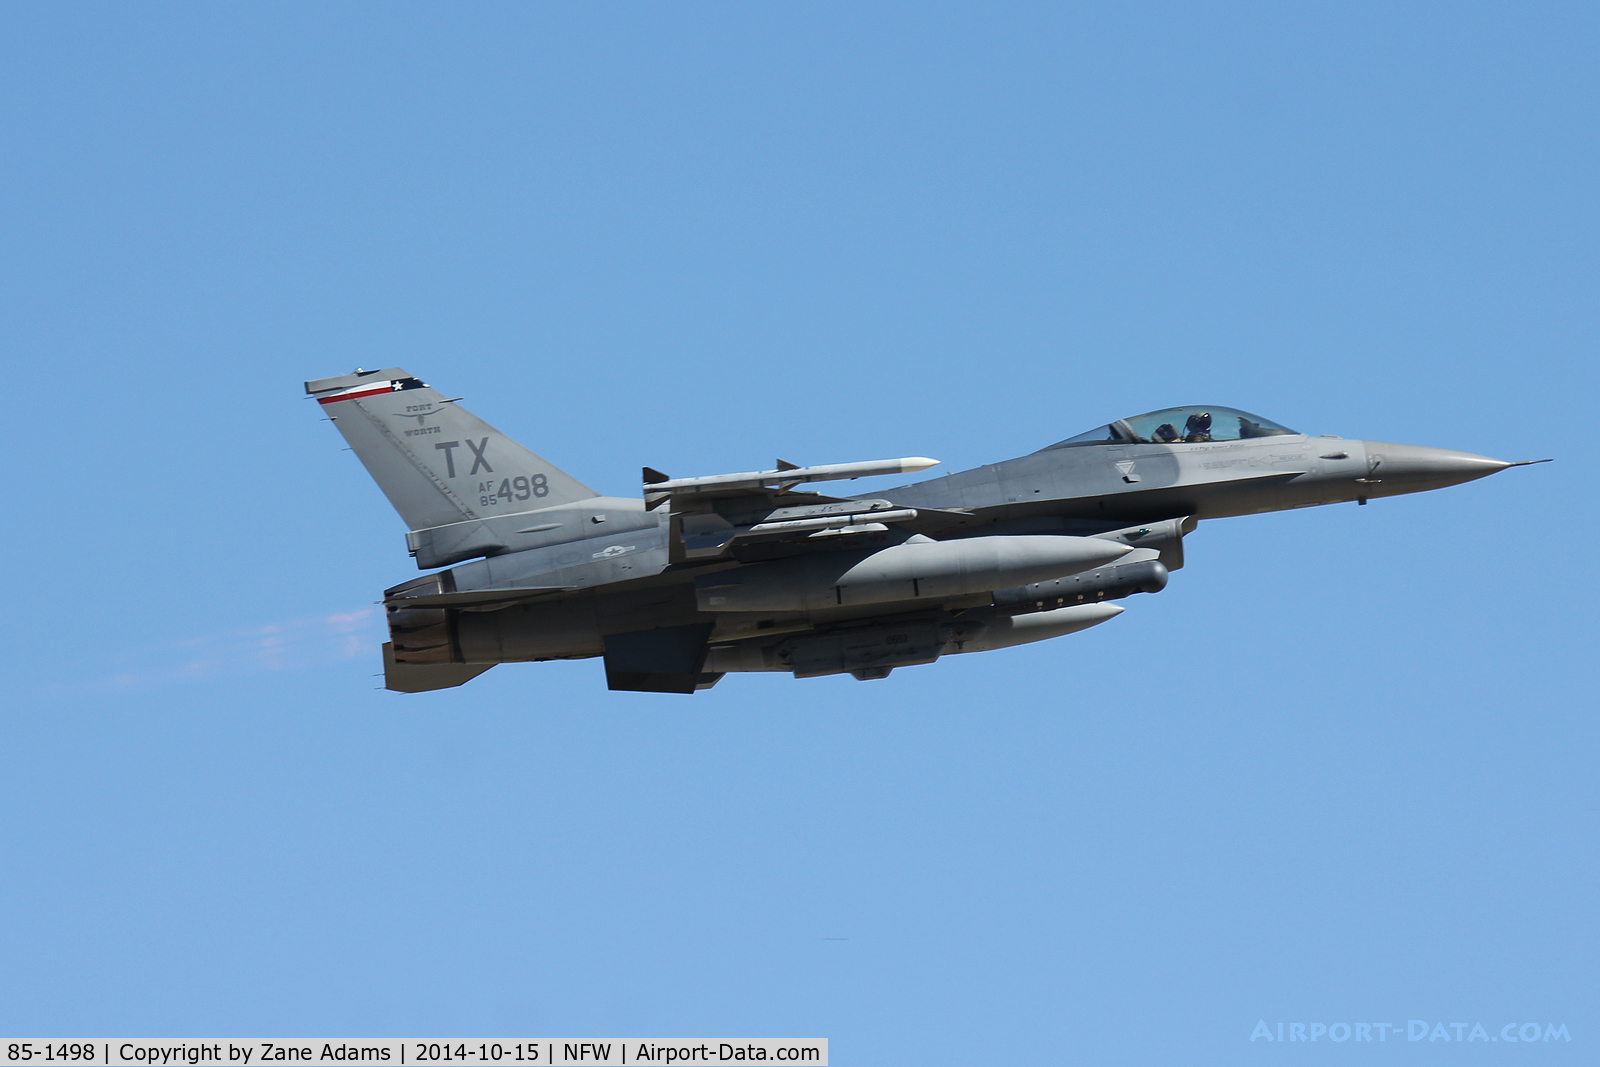 85-1498, 1985 Lockheed Martin F-16C Fighting Falcon C/N 5C-278, 301st FW F-16, departing NASJRB Fort Worth